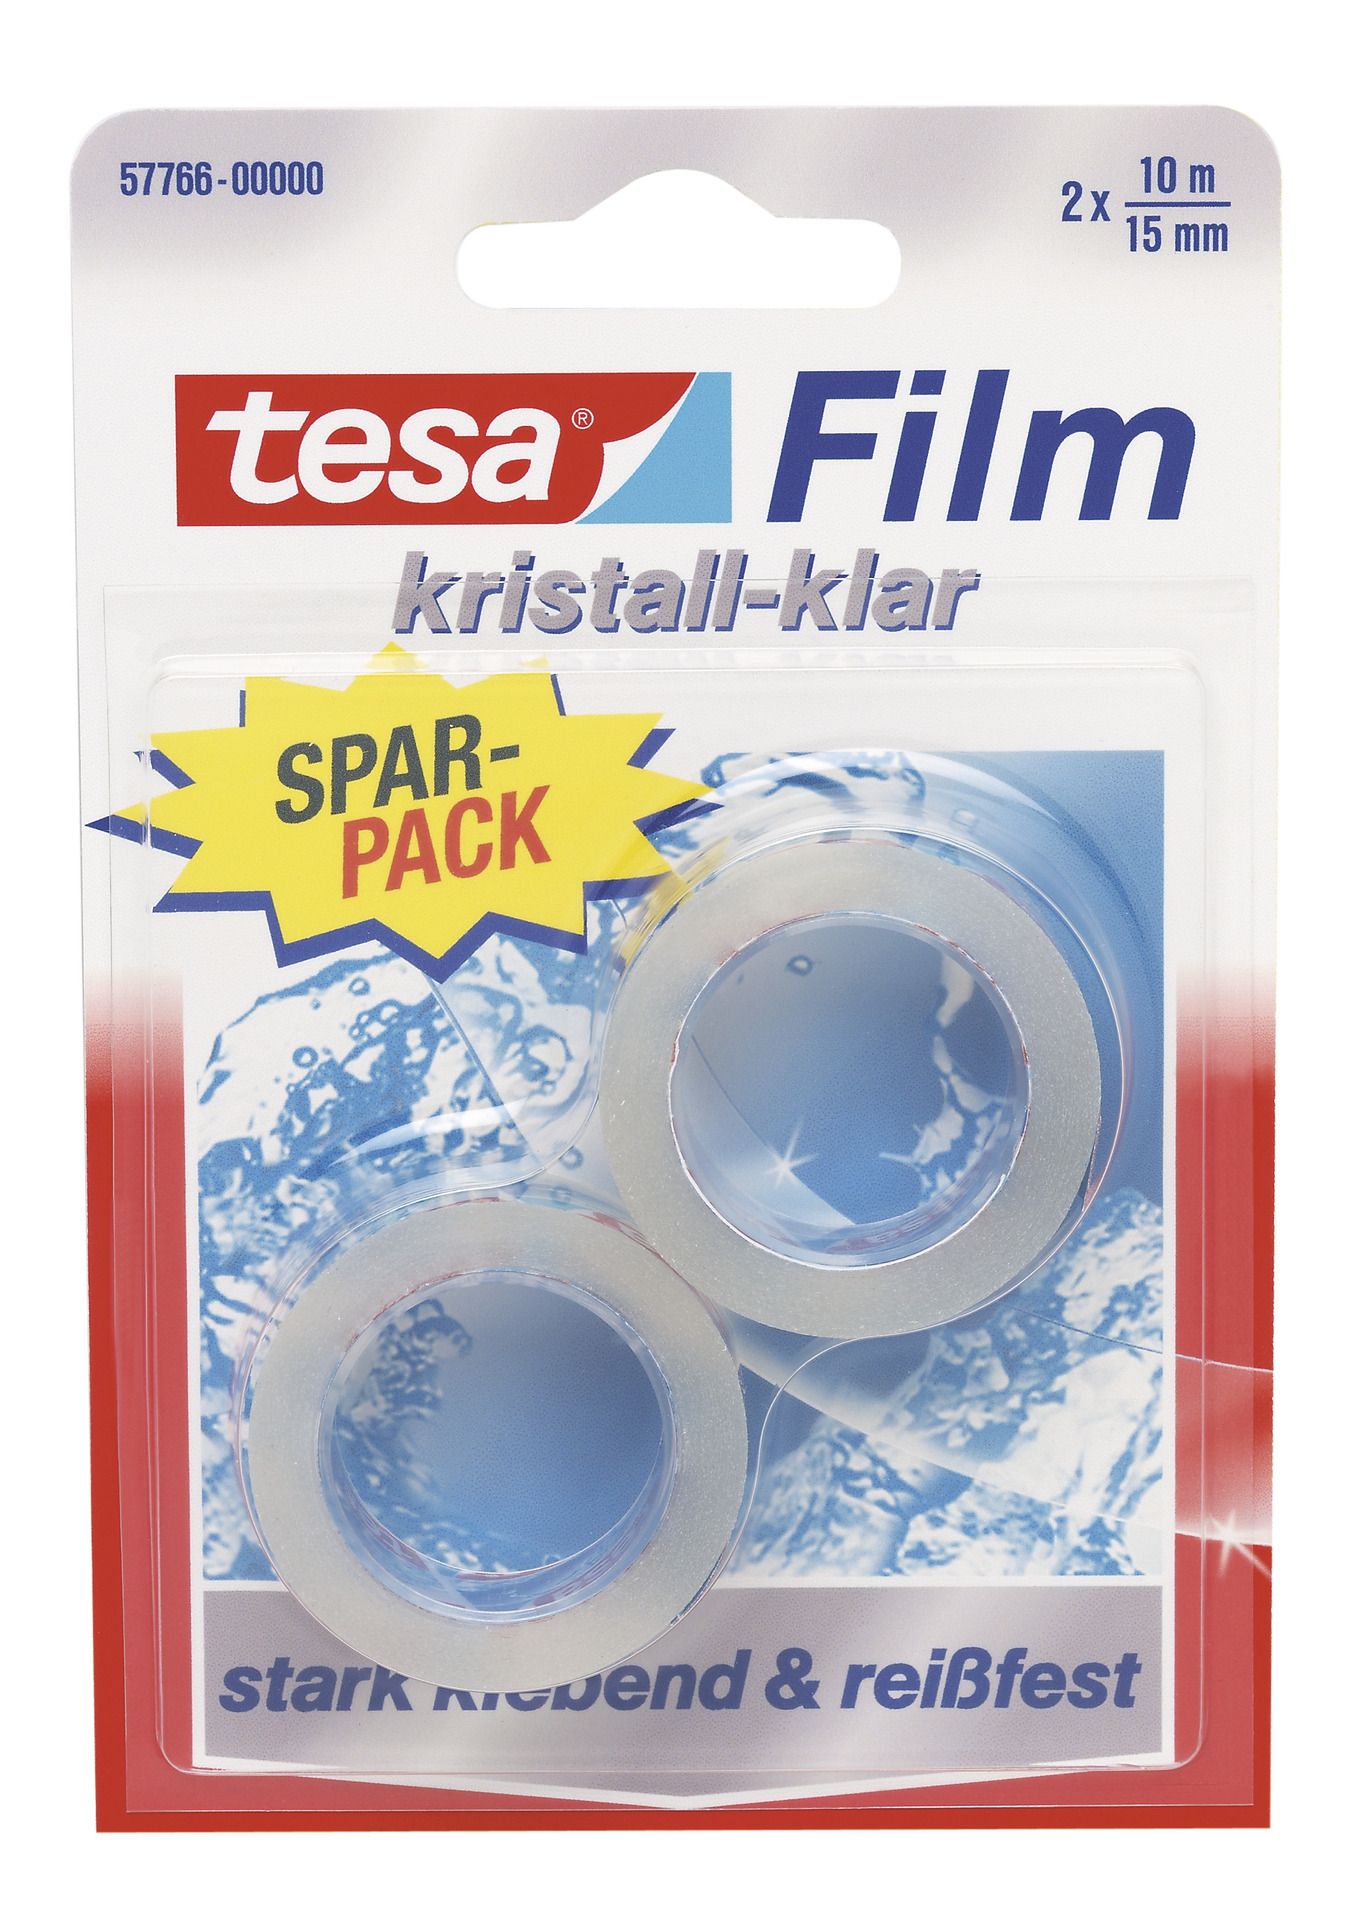 TESA SE Tesa-Film kristallklar